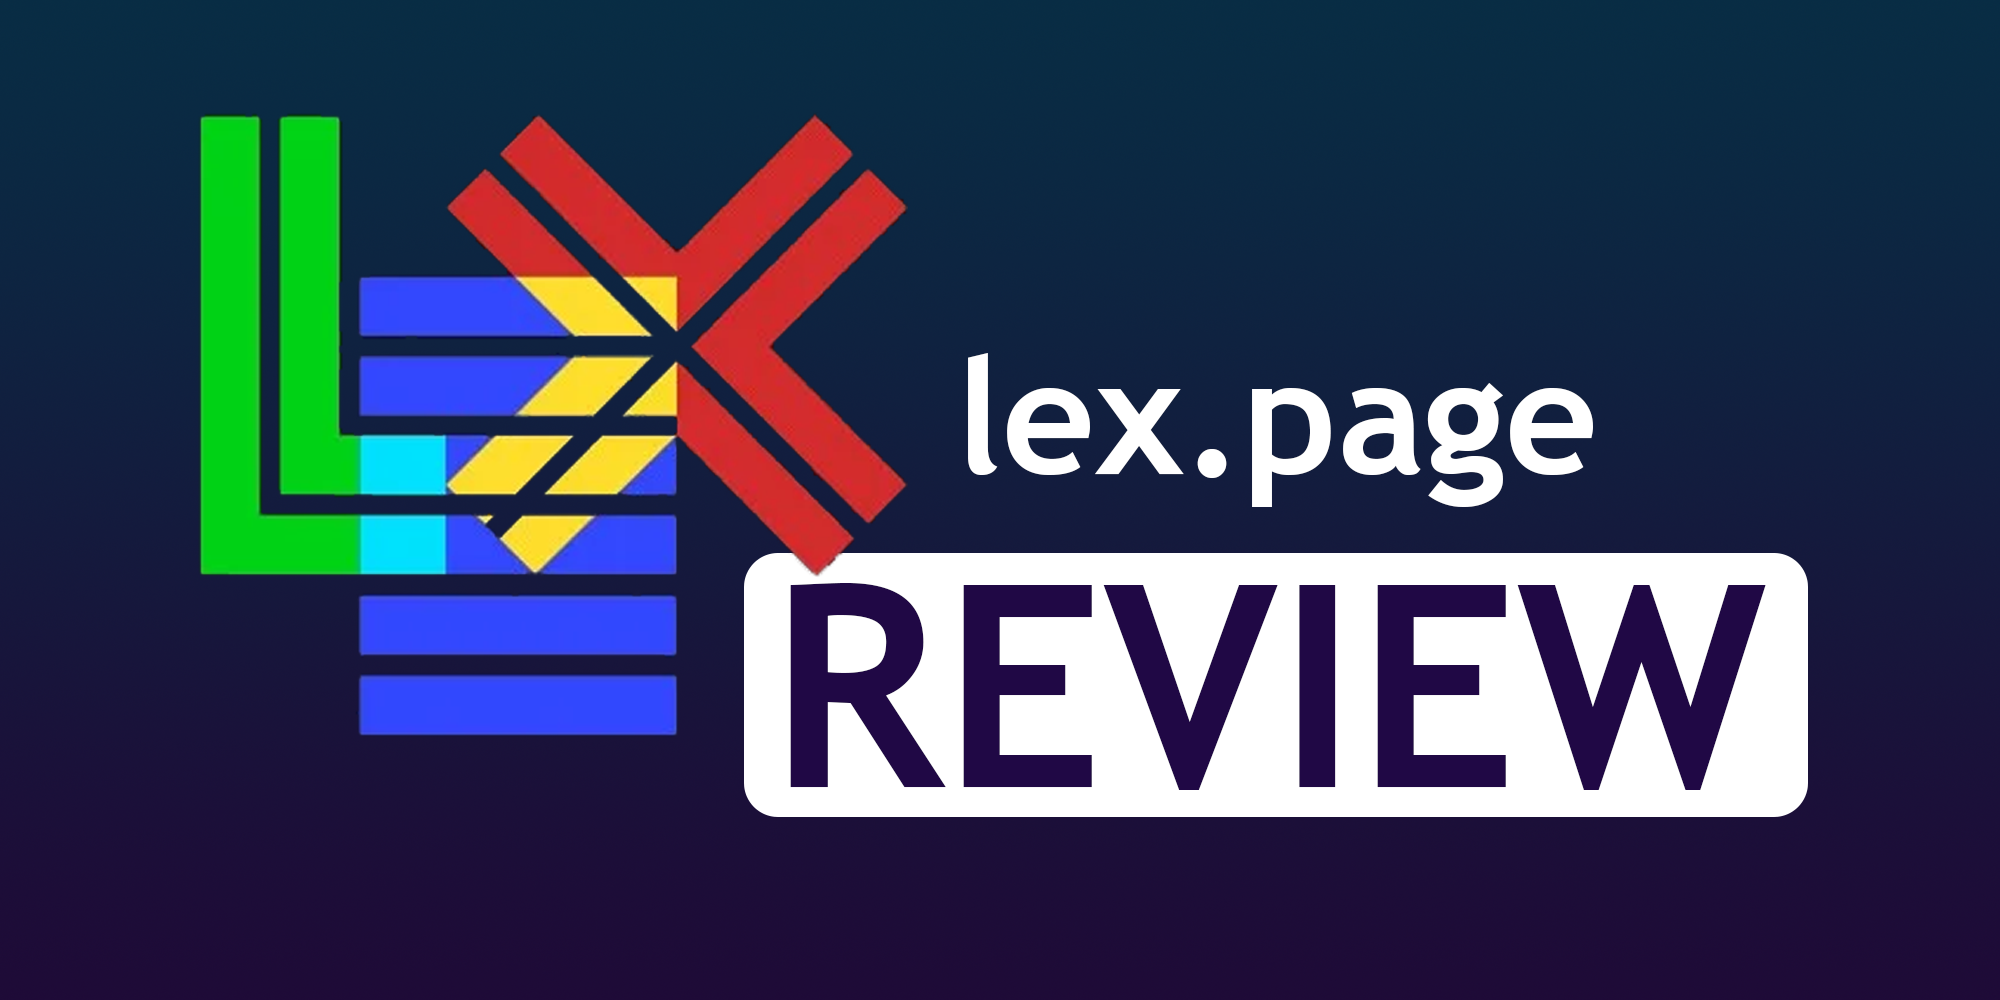 Lex page salesforce